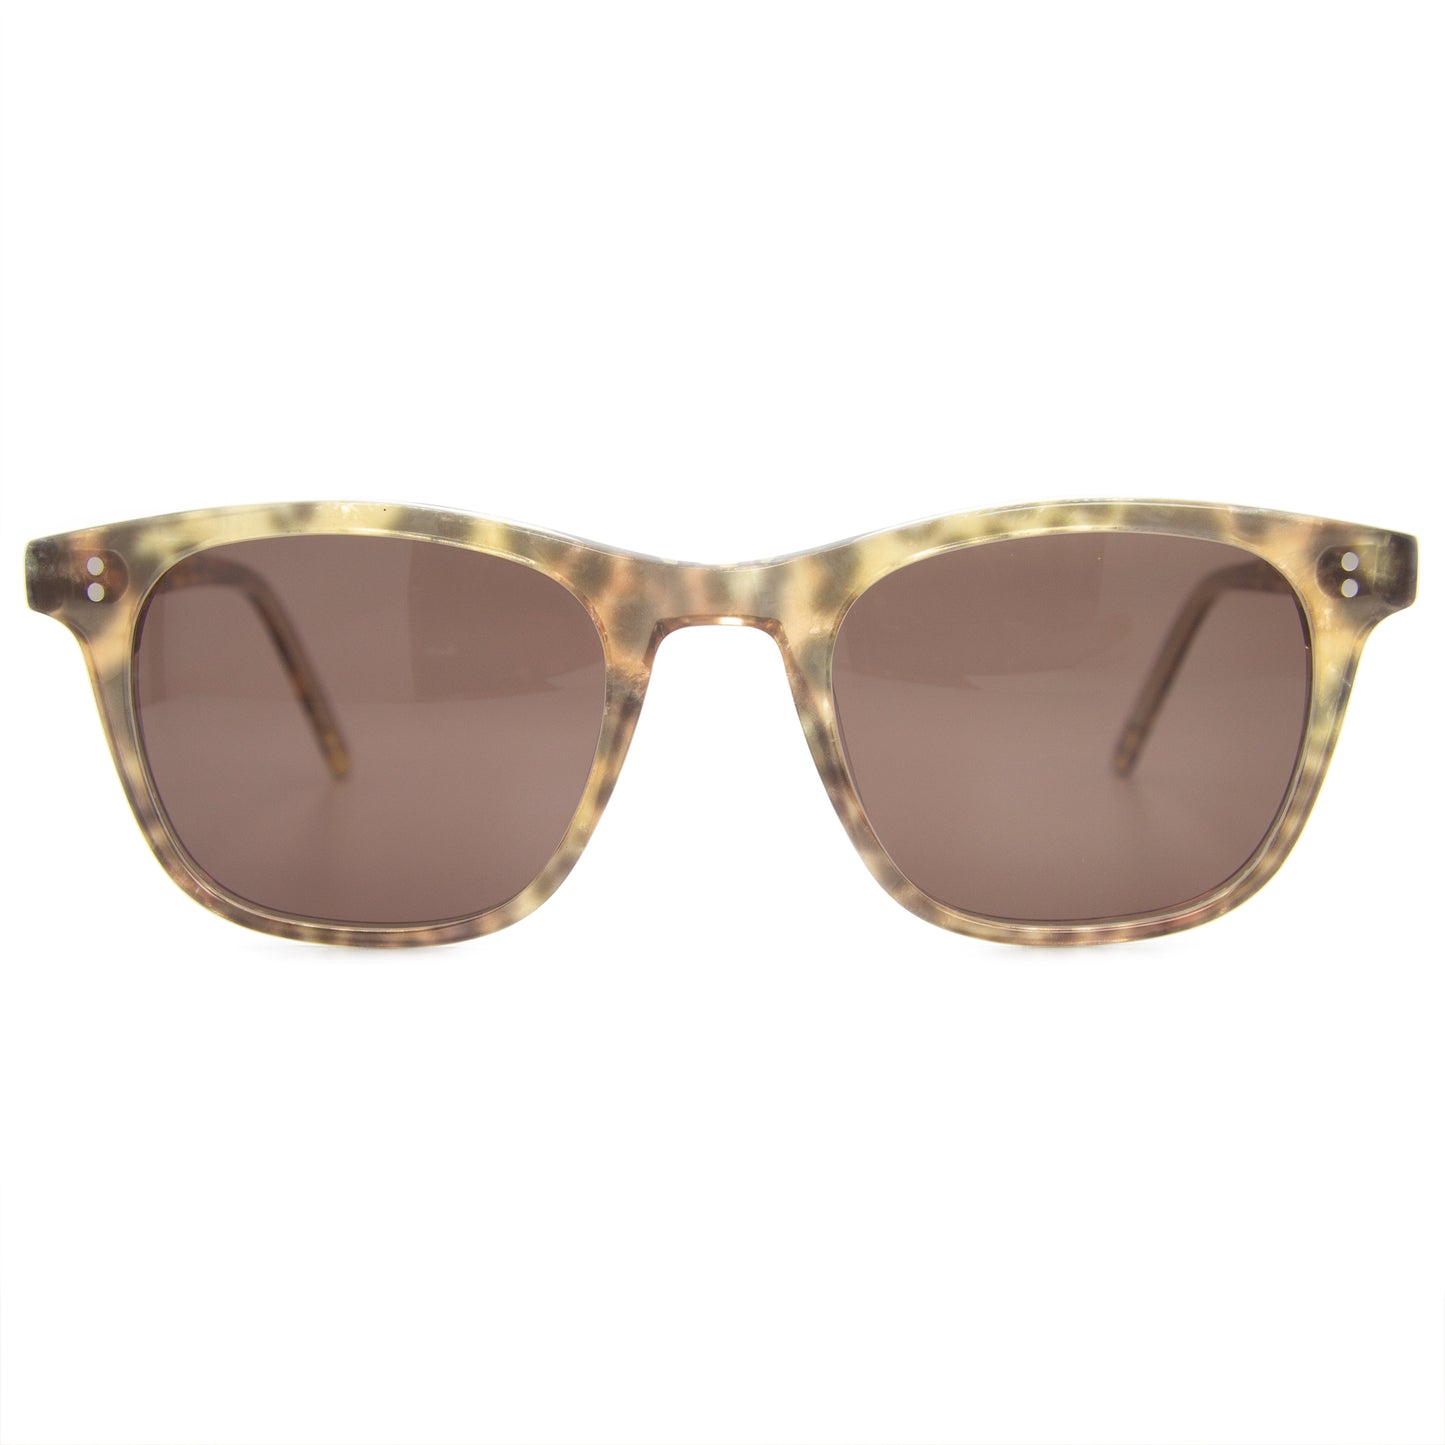 3 brothers - Yai Yai Alki - Leopard - Prescription Sunglasses 